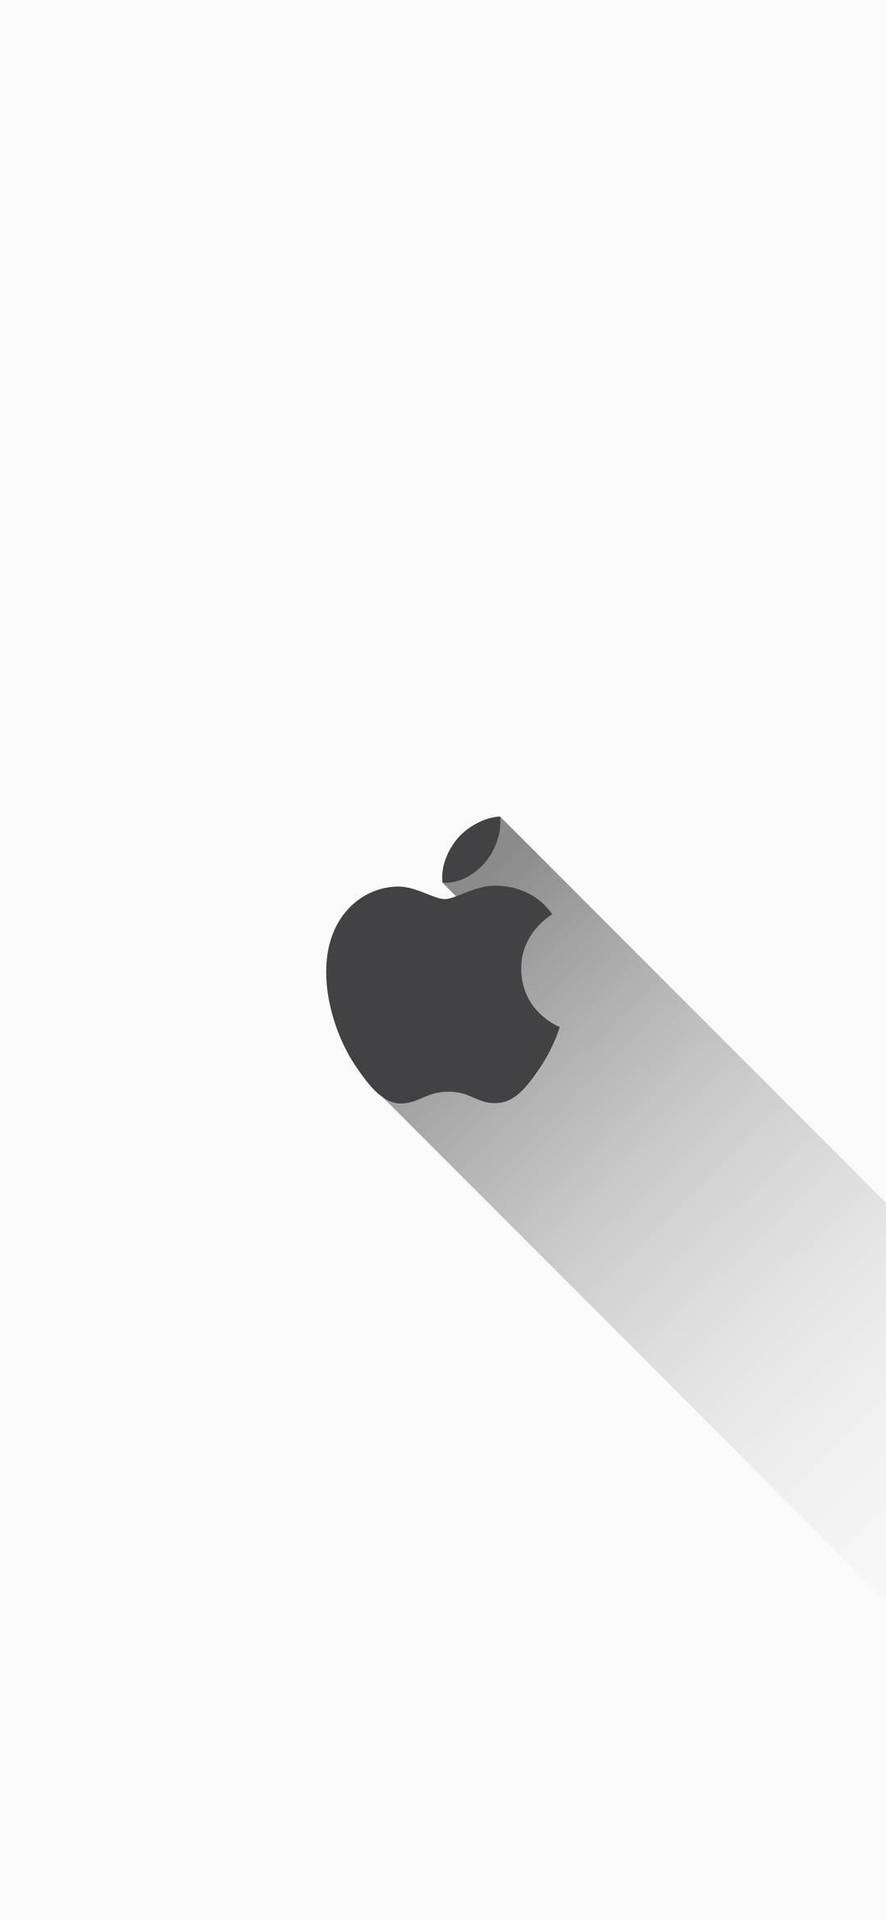 Fondode Pantalla Blanco Con El Logo De Apple Para Iphone. Fondo de pantalla